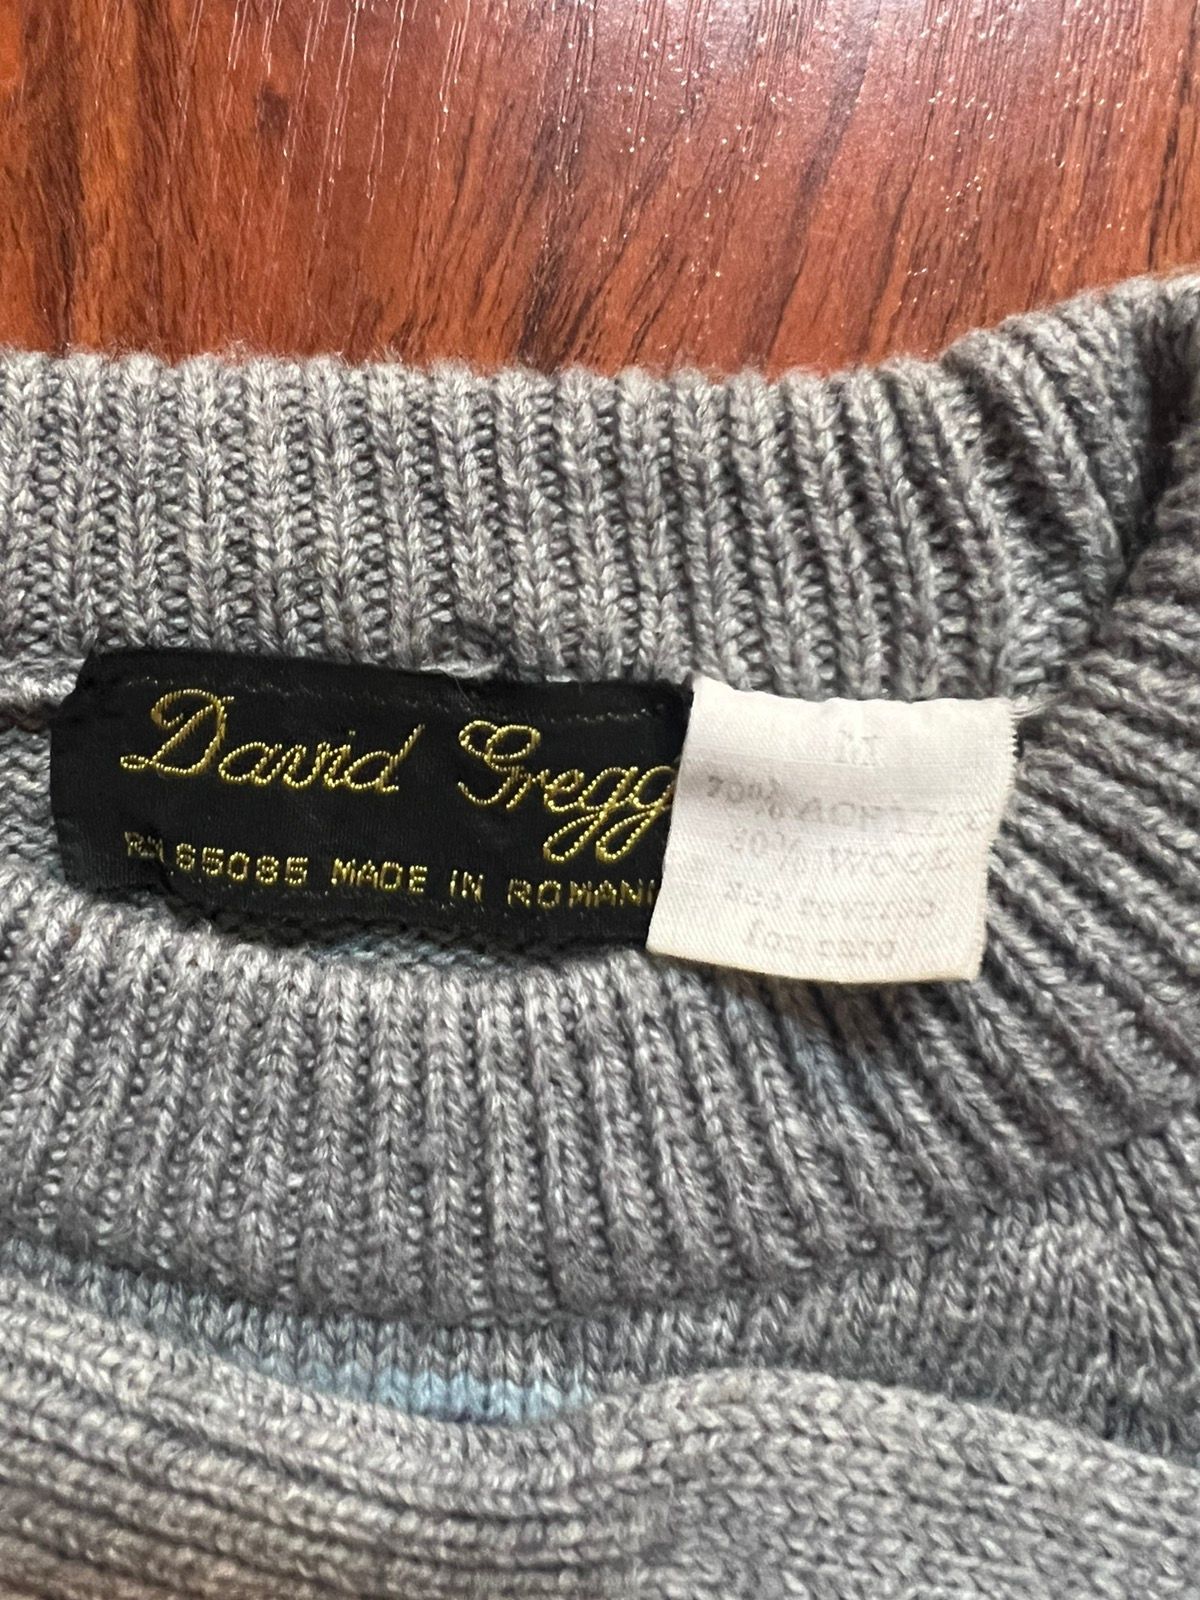 Vintage Vintage 80s David Gregg Wool Striped Sweater Romanian Made Size US M / EU 48-50 / 2 - 3 Thumbnail